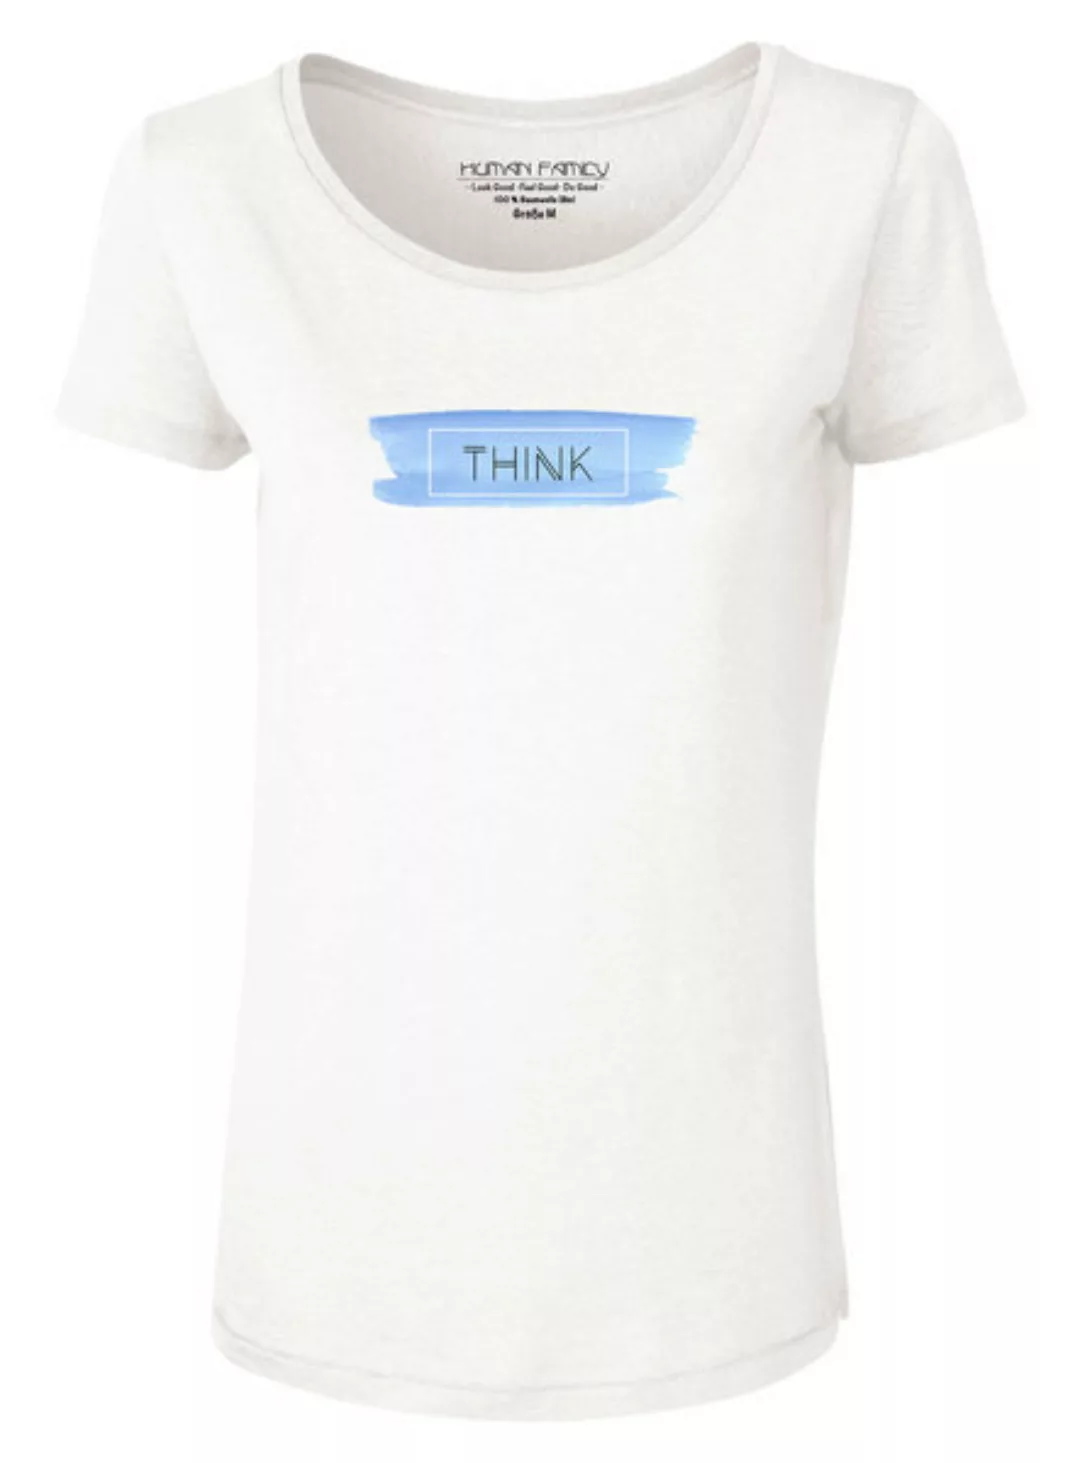 Damen T-shirt Aus Modal "Adore Modal Think" günstig online kaufen